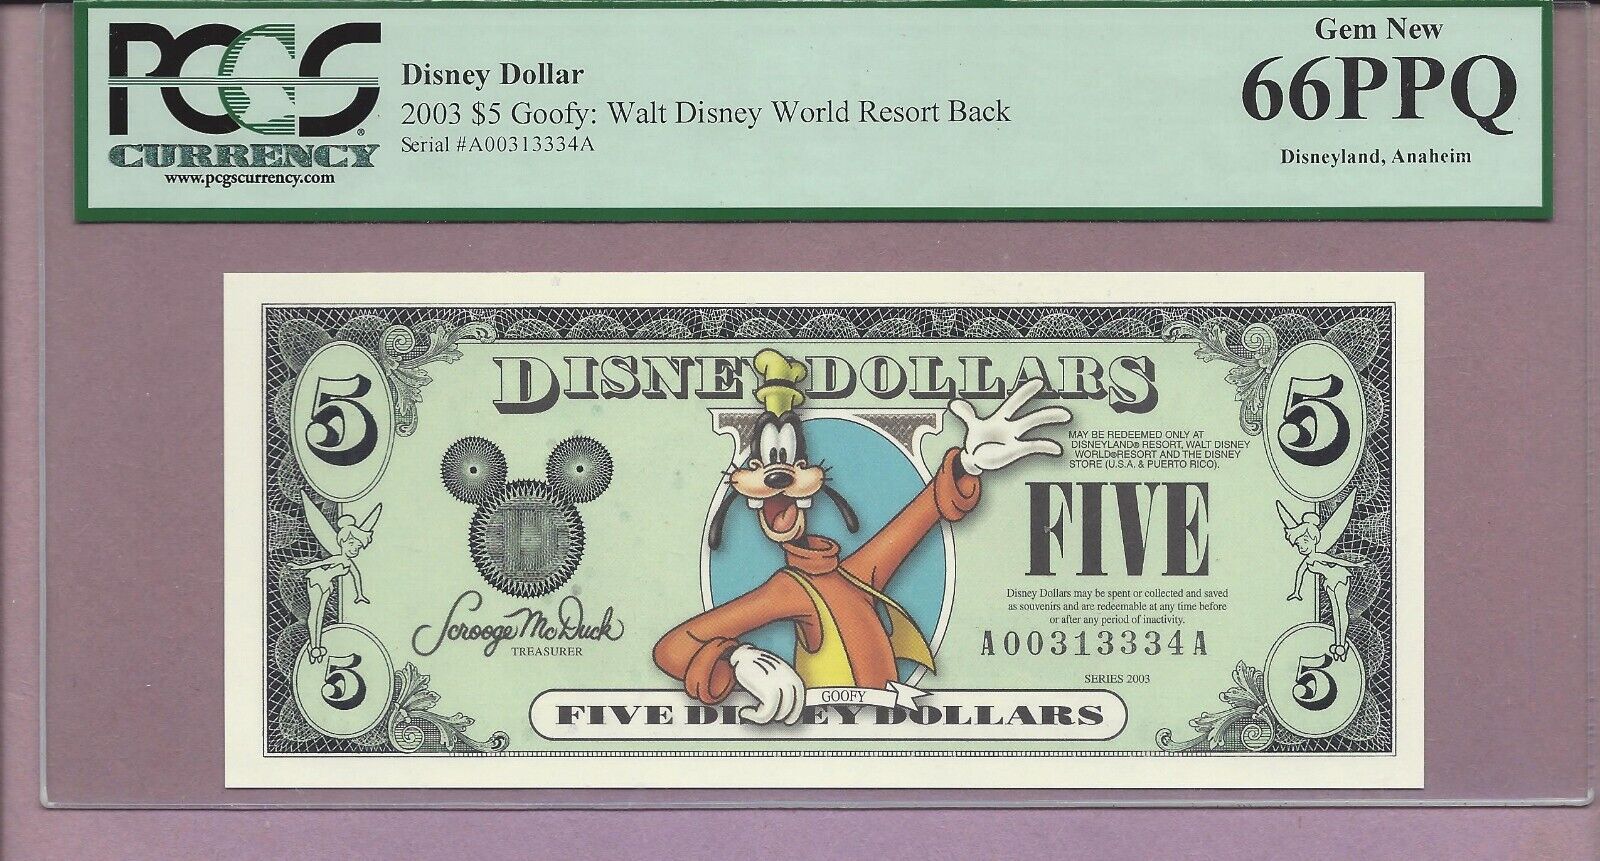 2003 $5 Goofy Disney Dollar PCGS PPQ GEM